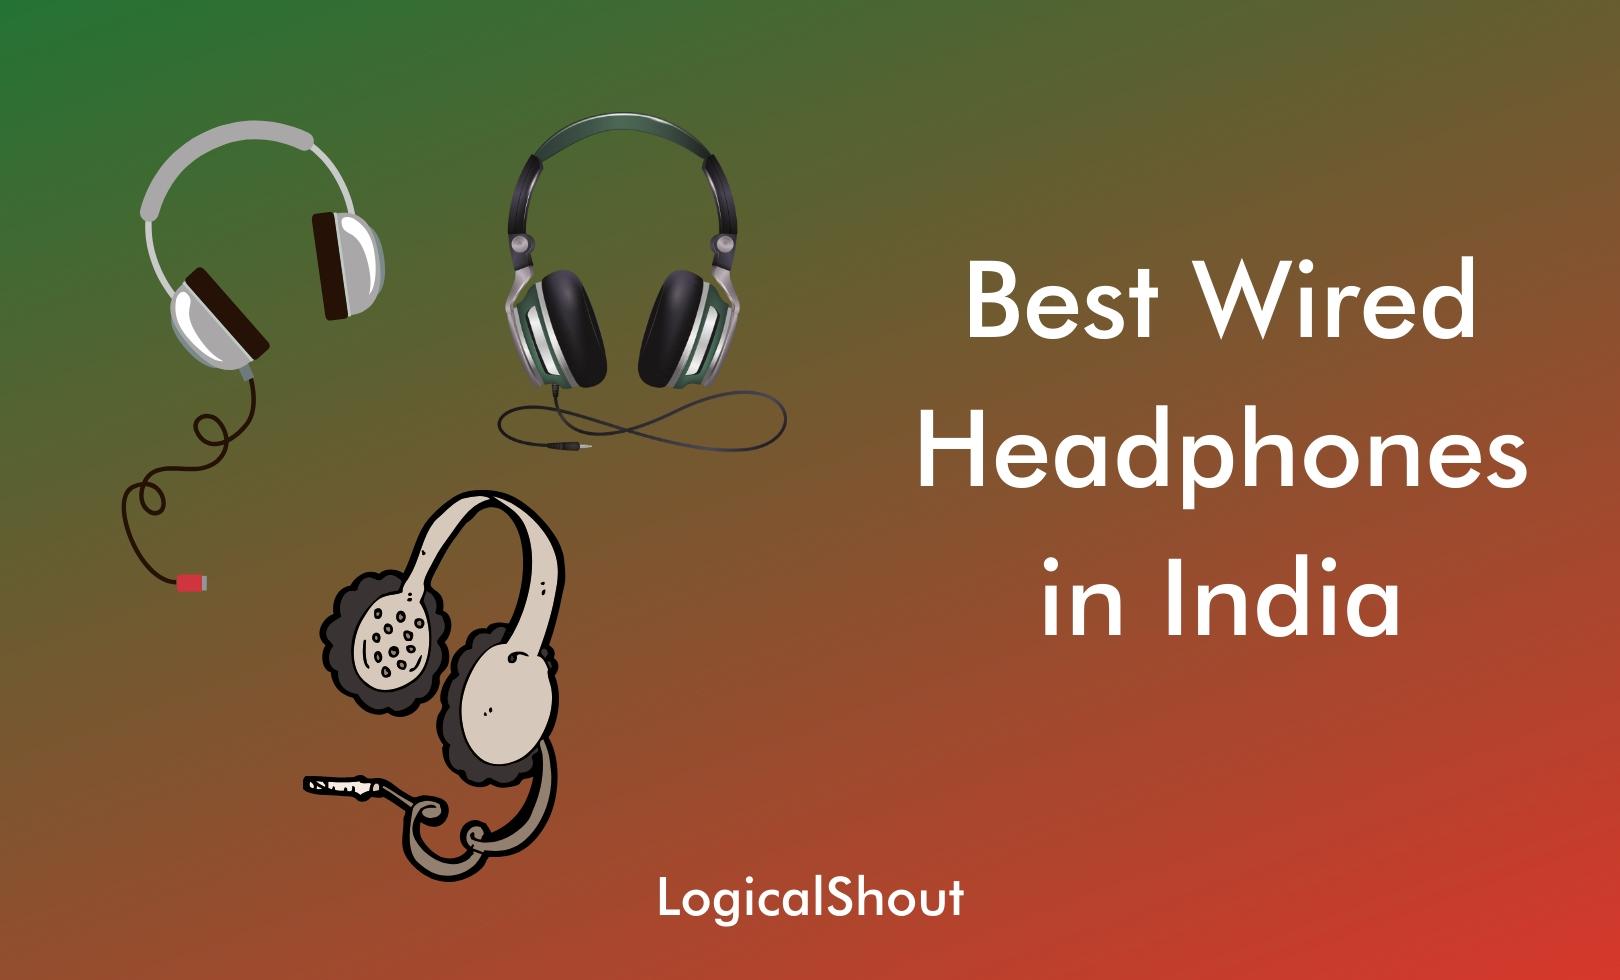 Best Wired Headphones in India